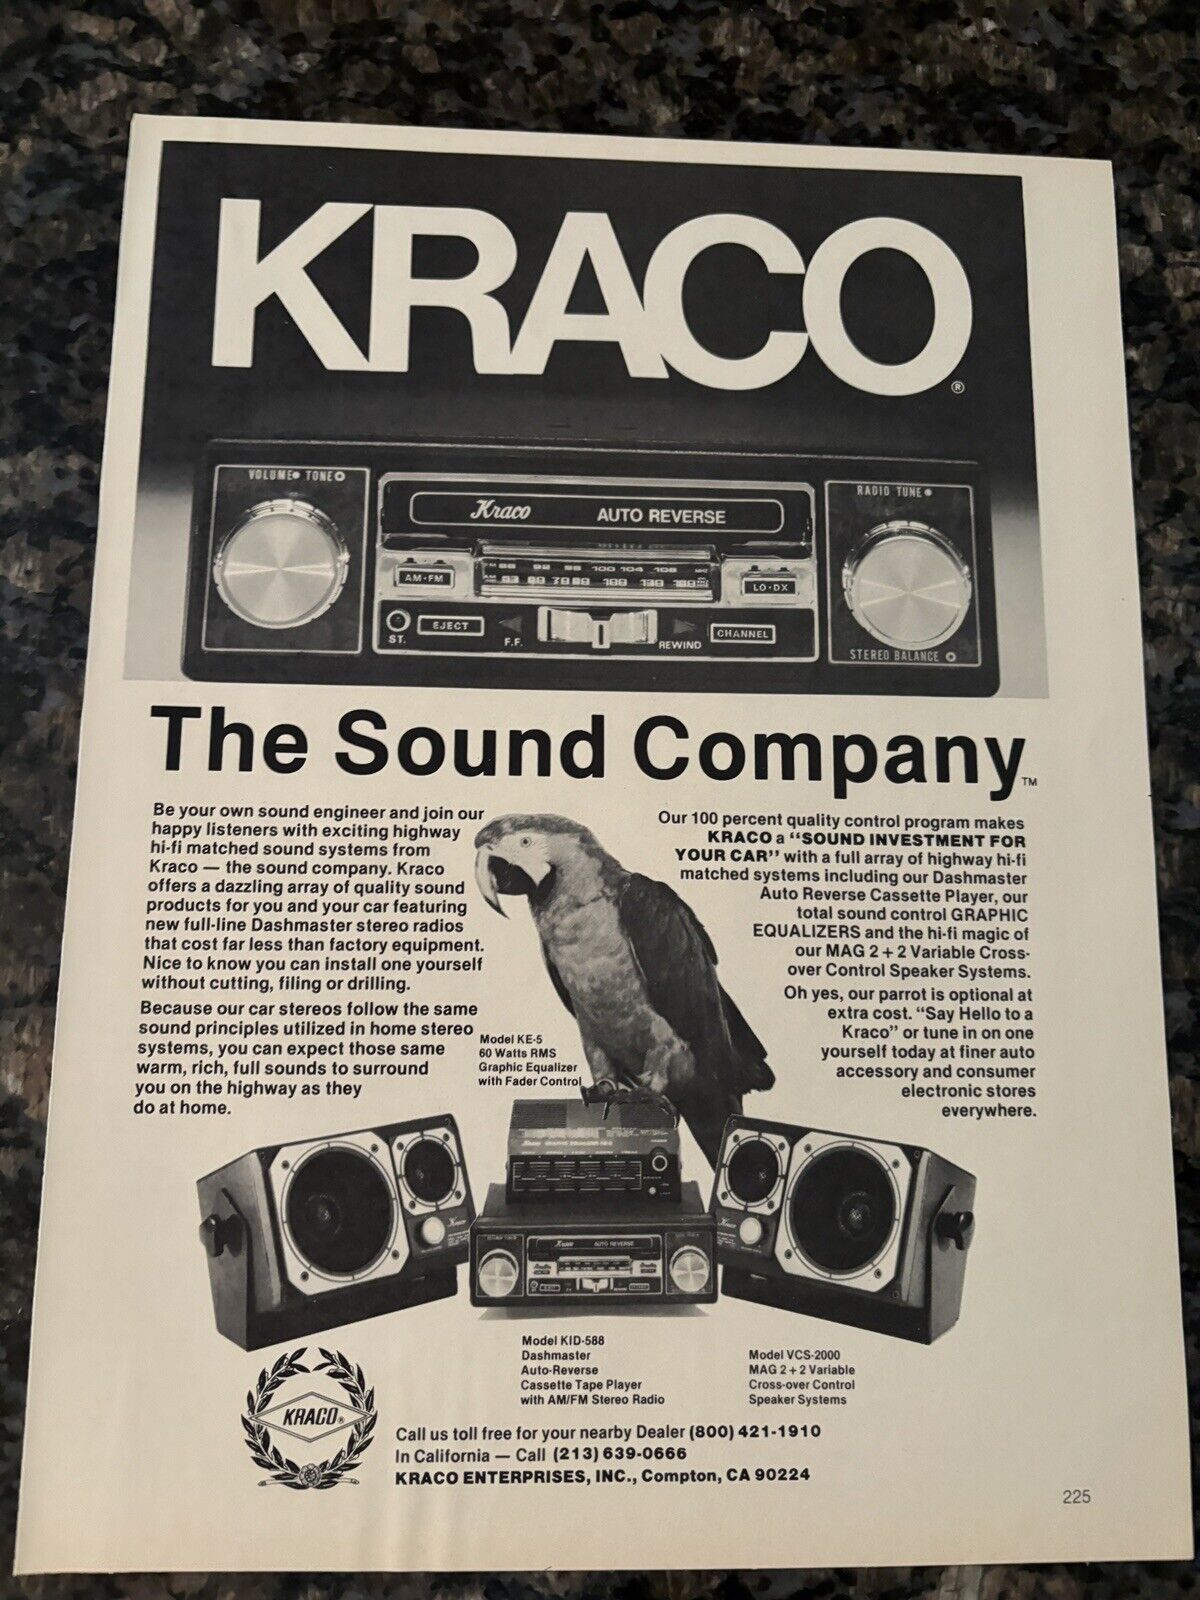 Kraco Car Stereo Compton California The Sound Co. *DISCR* Vintage Print Ad 1978